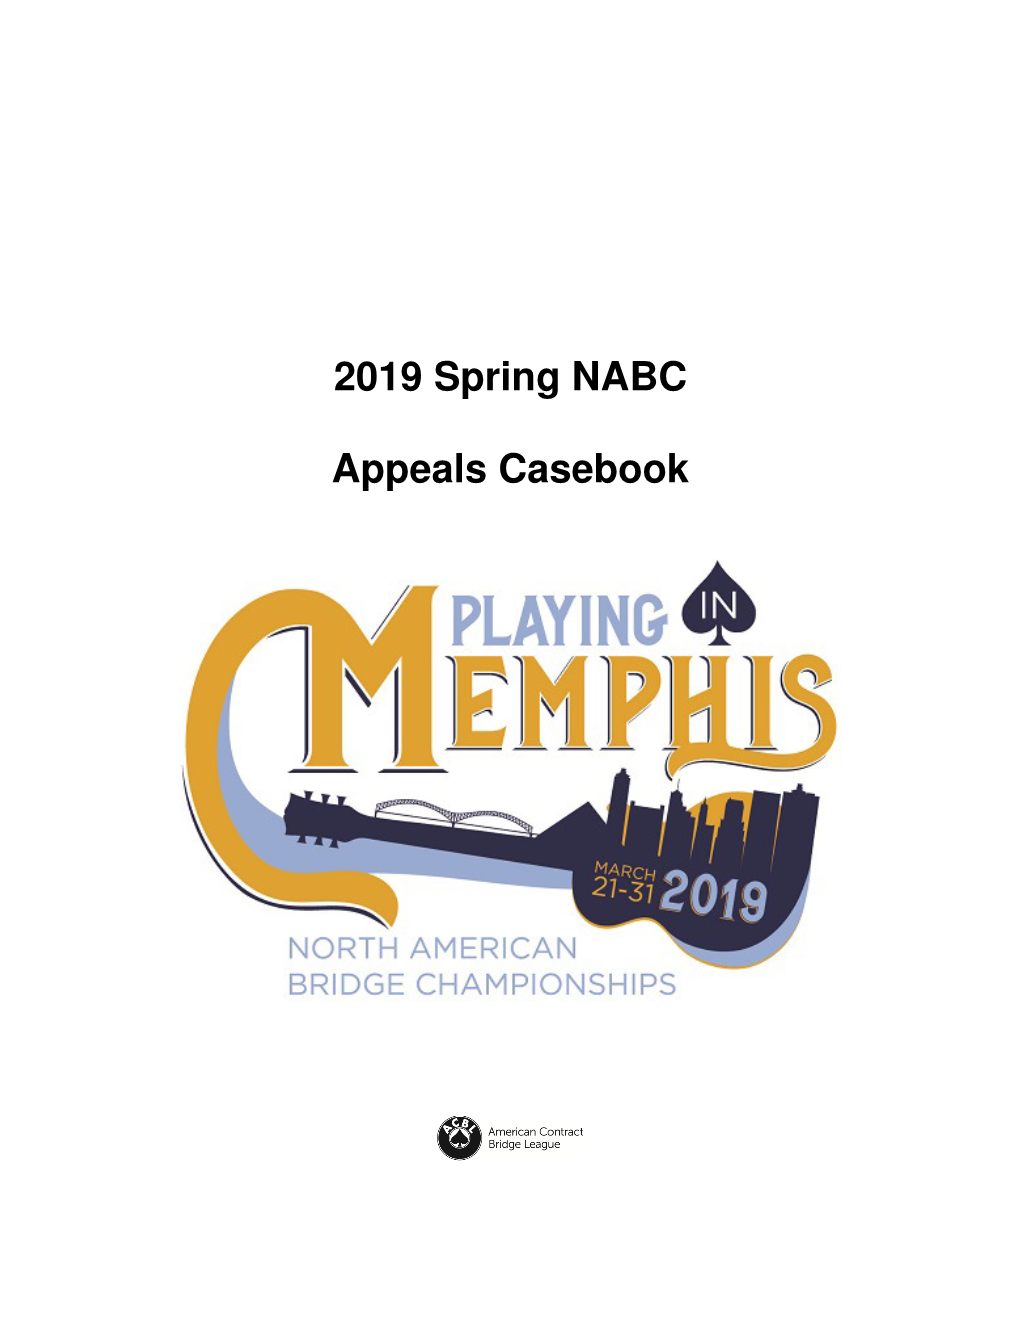 2019 Spring NABC Appeals Casebook